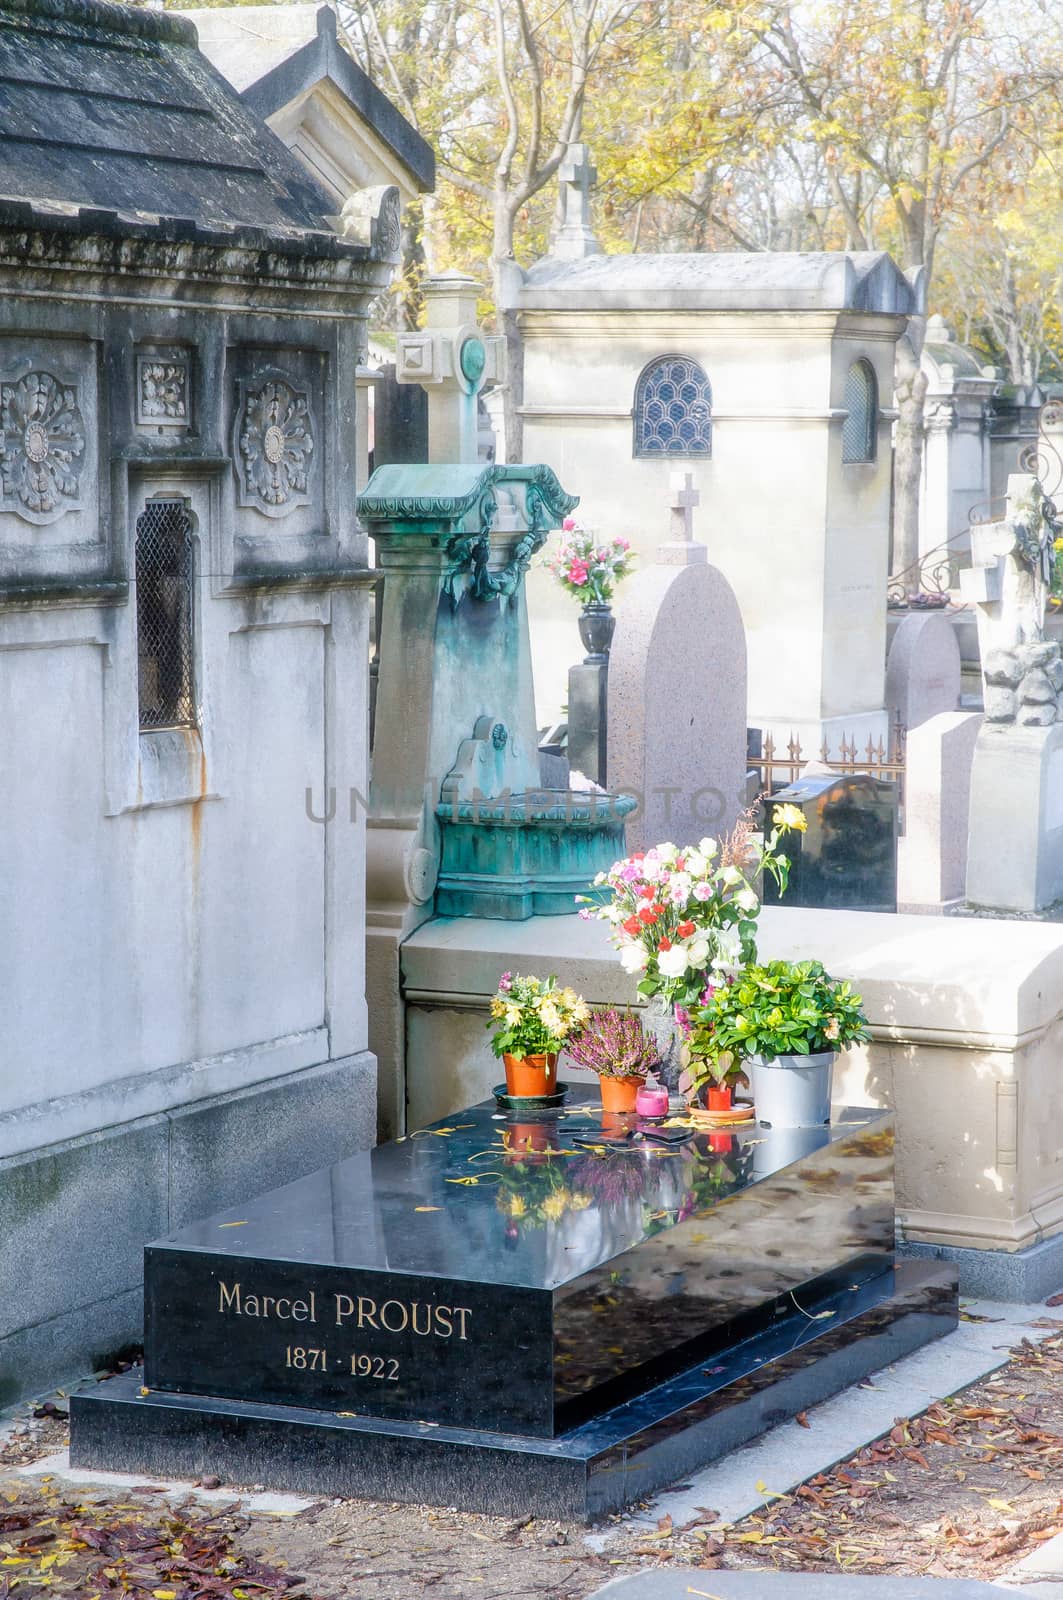 Marcel Proust Tomb by MaxalTamor